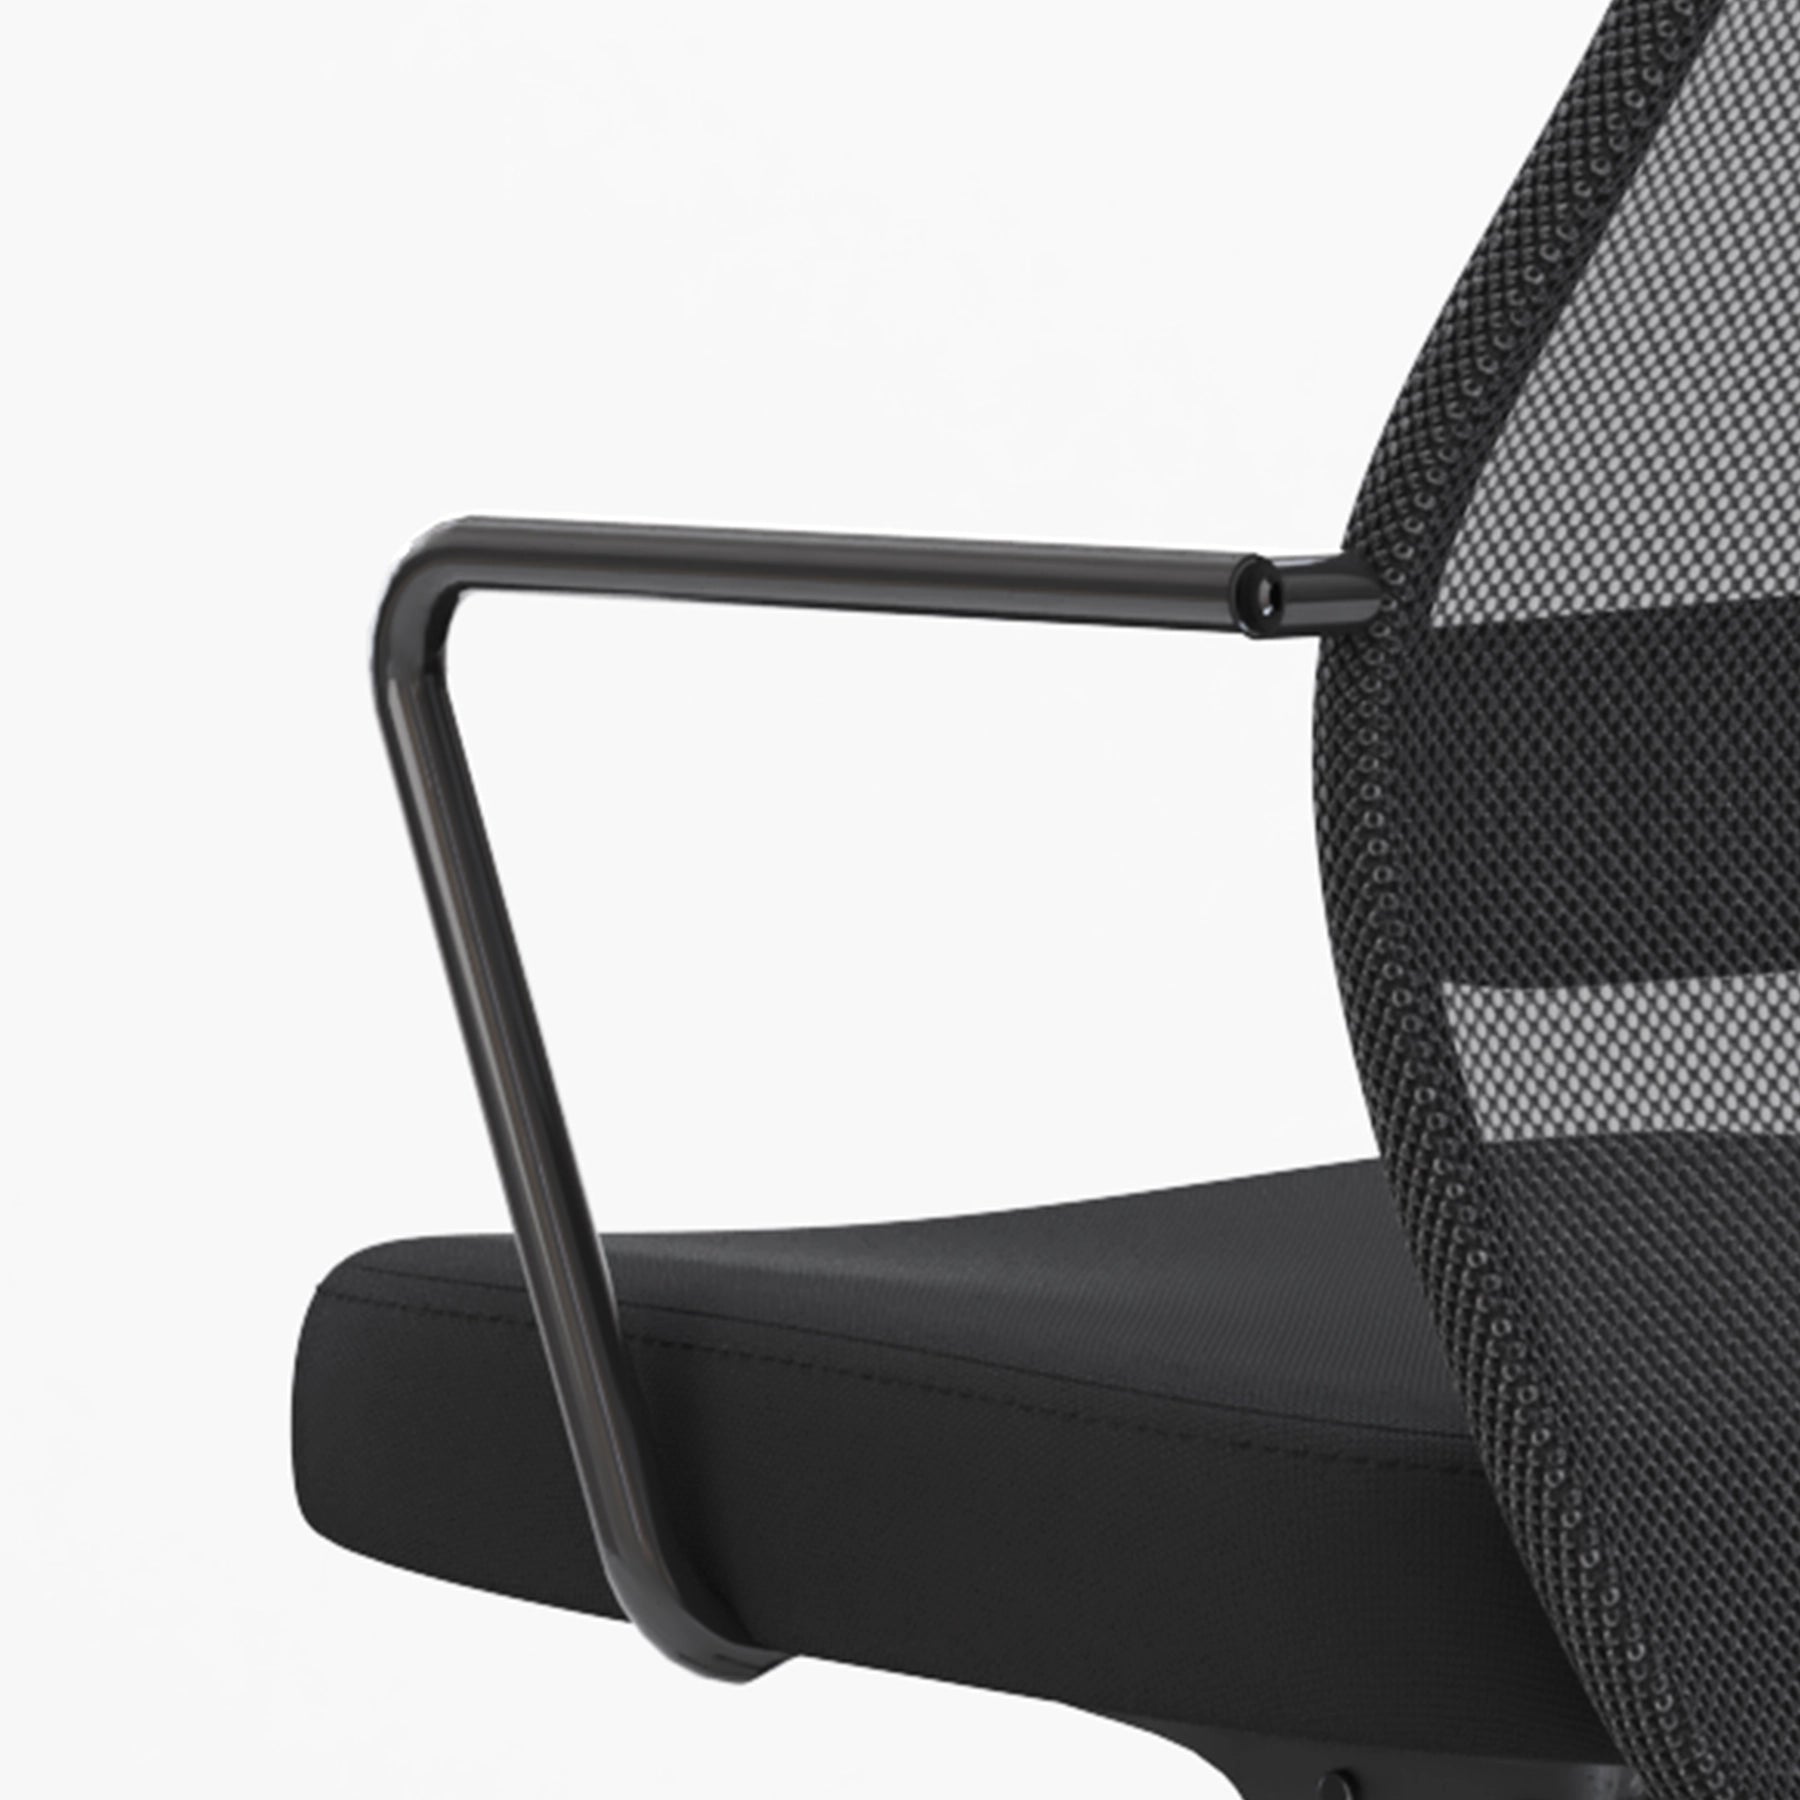 Sihoo M101C High-Back Ergonomic Office Chair